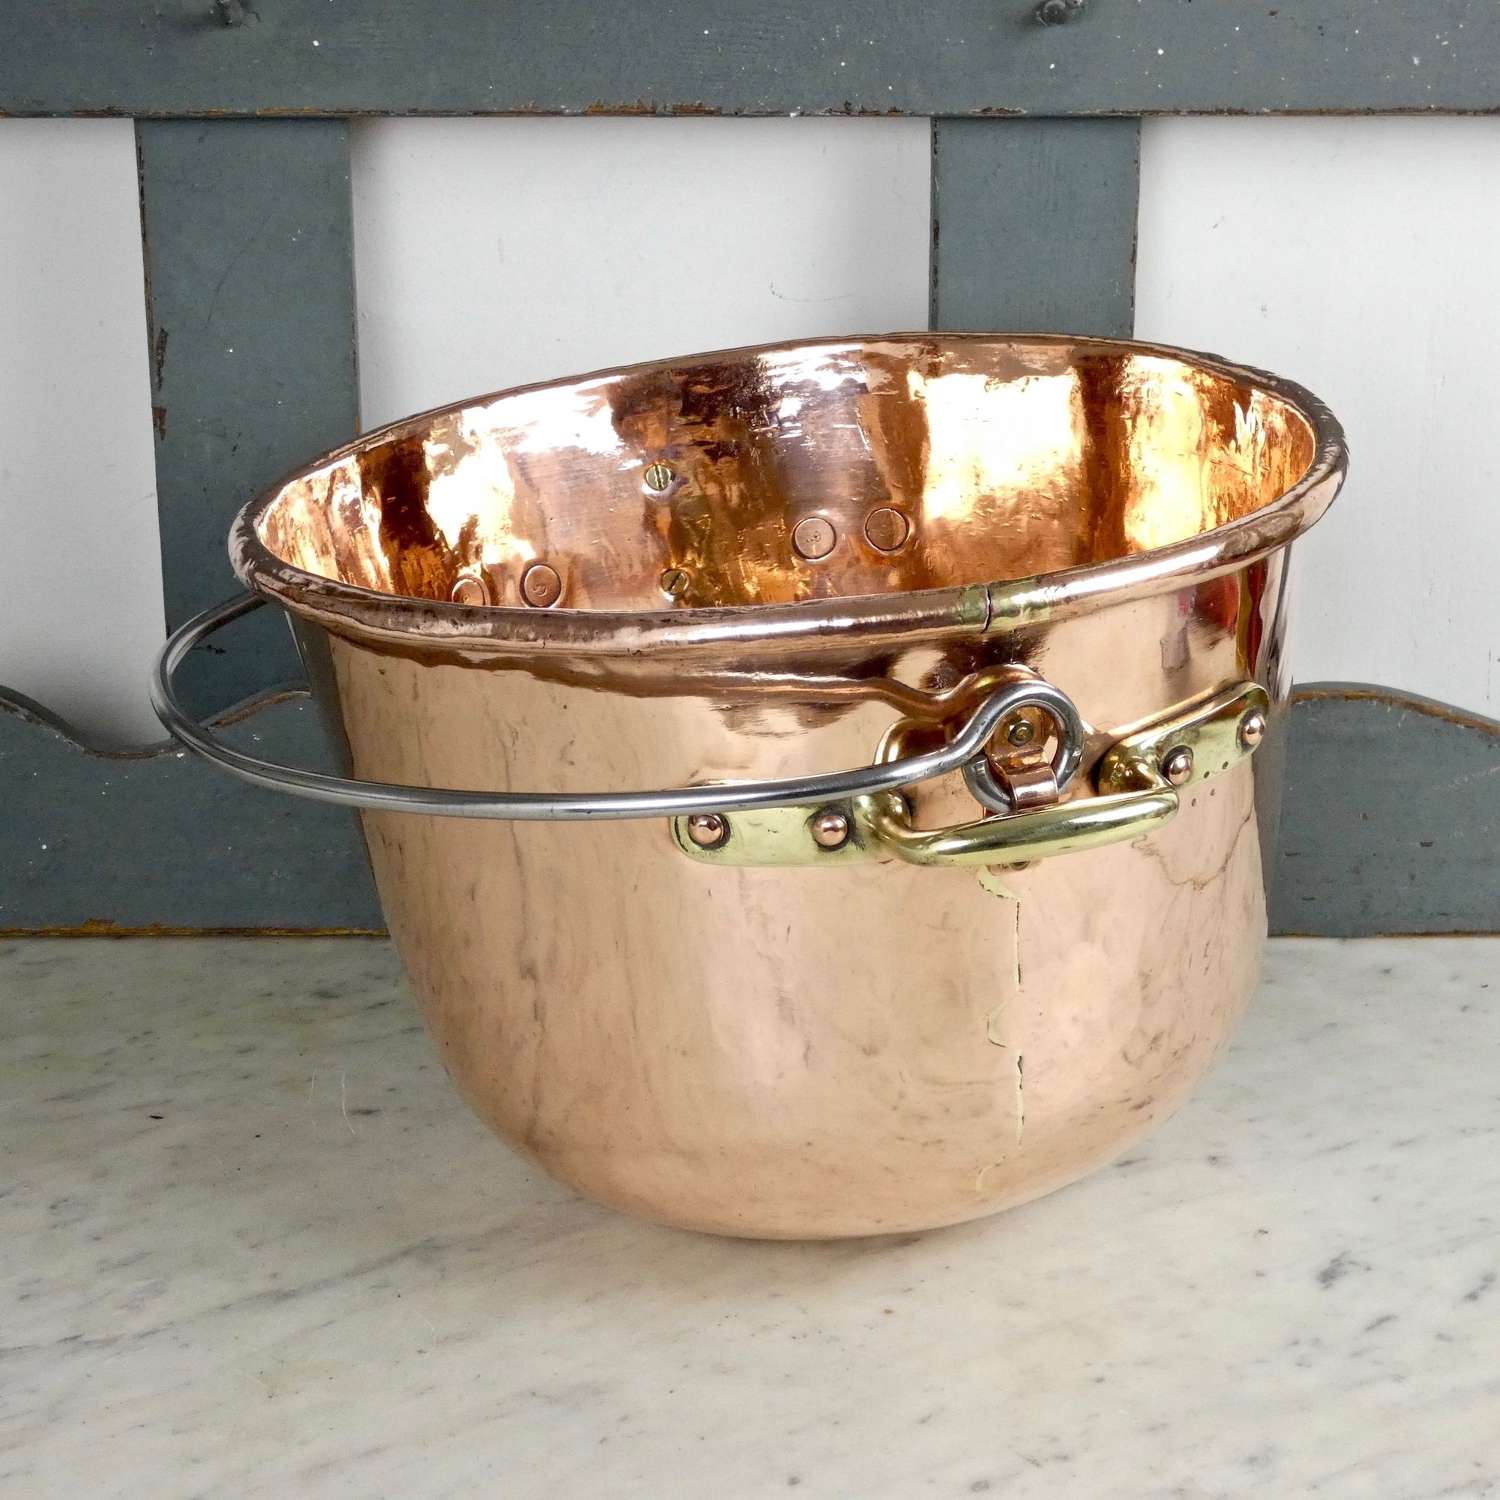 Hanging, copper sugar bowl